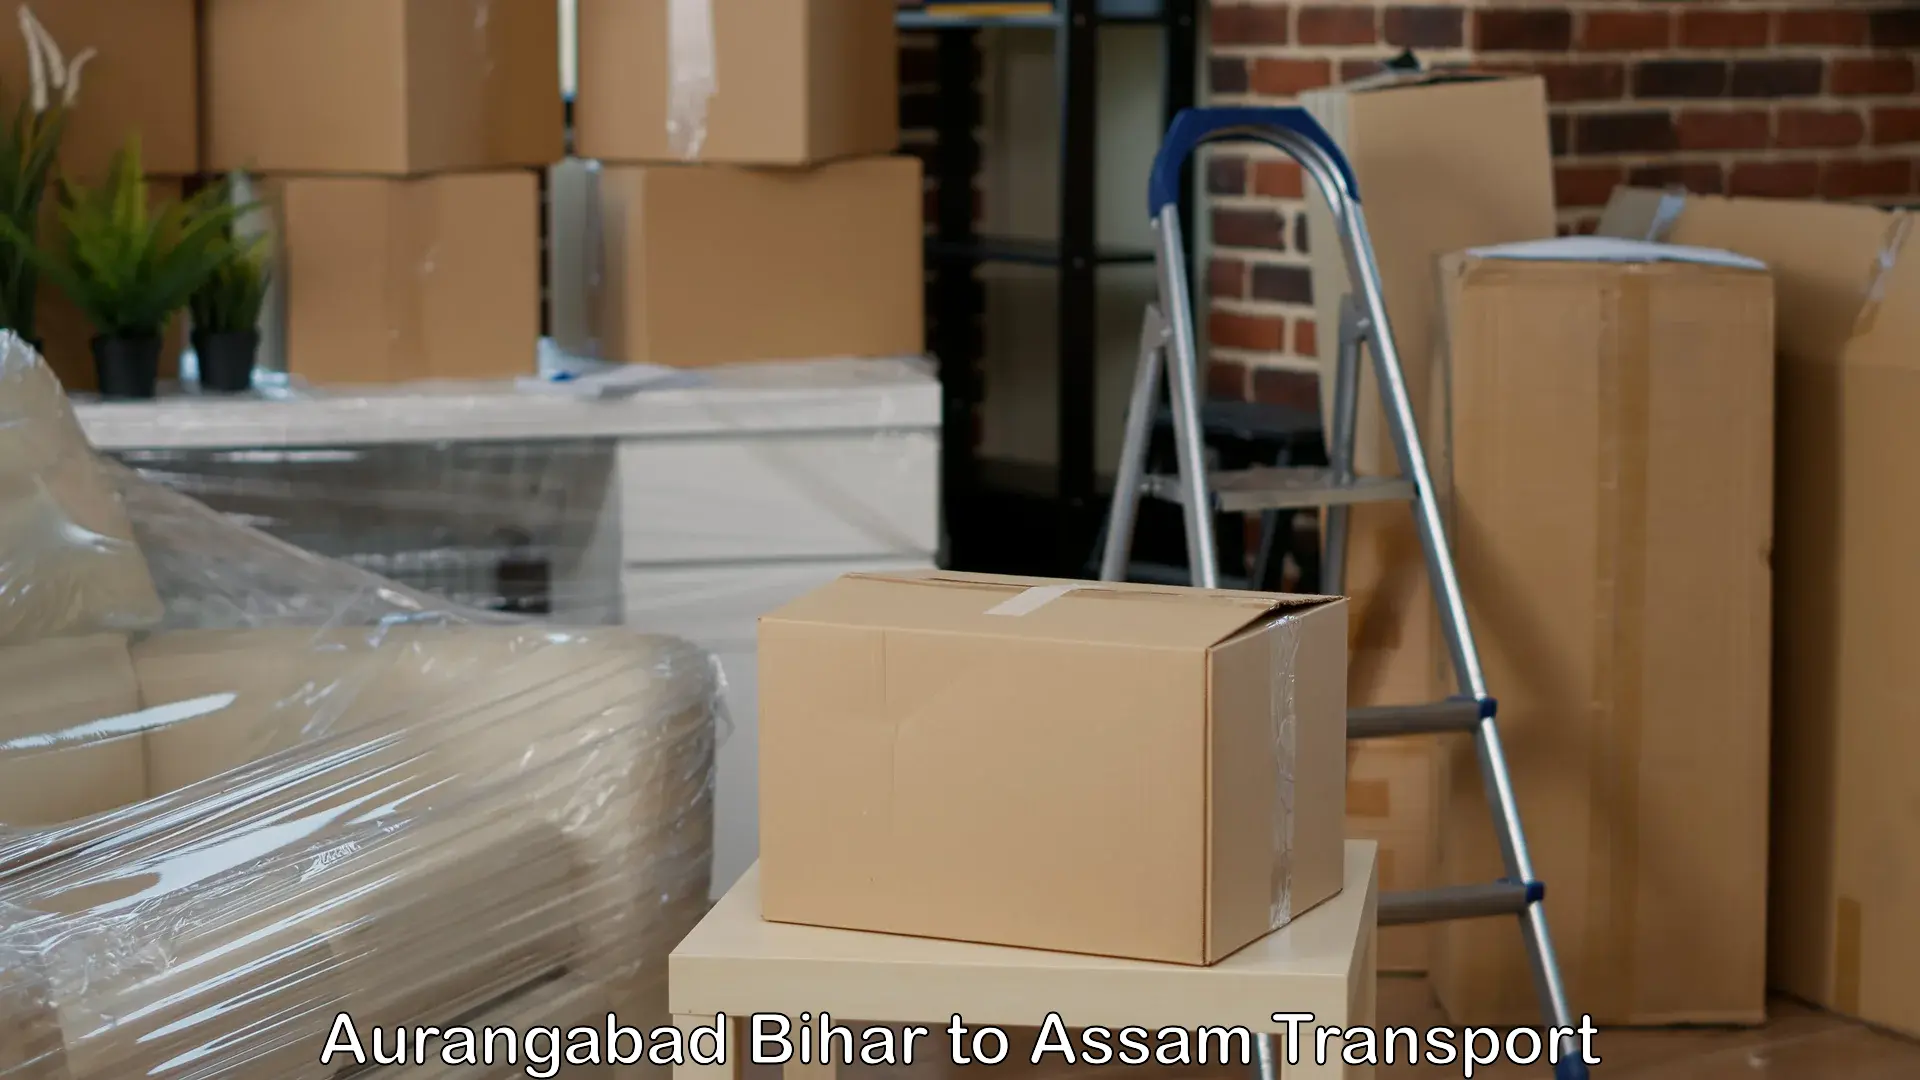 Part load transport service in India Aurangabad Bihar to Silchar